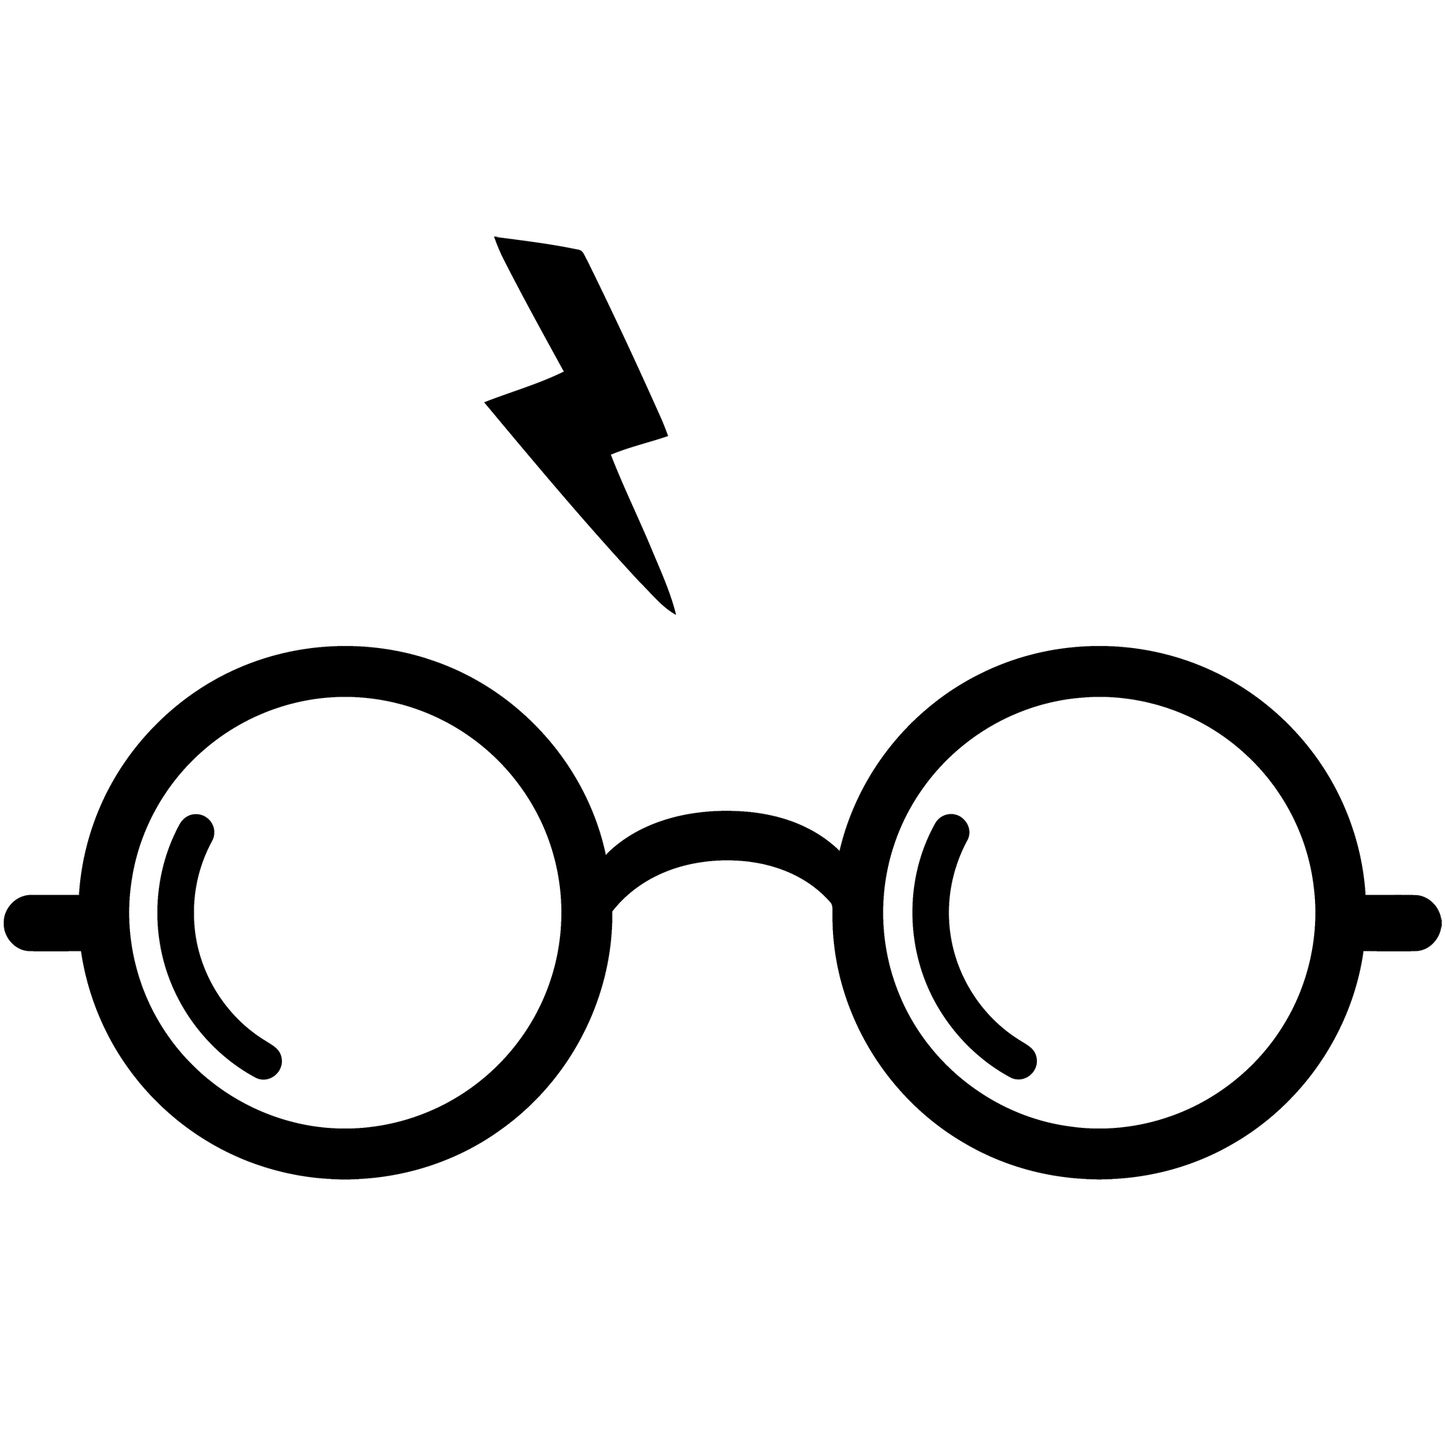 Harry Potter Glasses & Scar Vinyl Decal Sticker